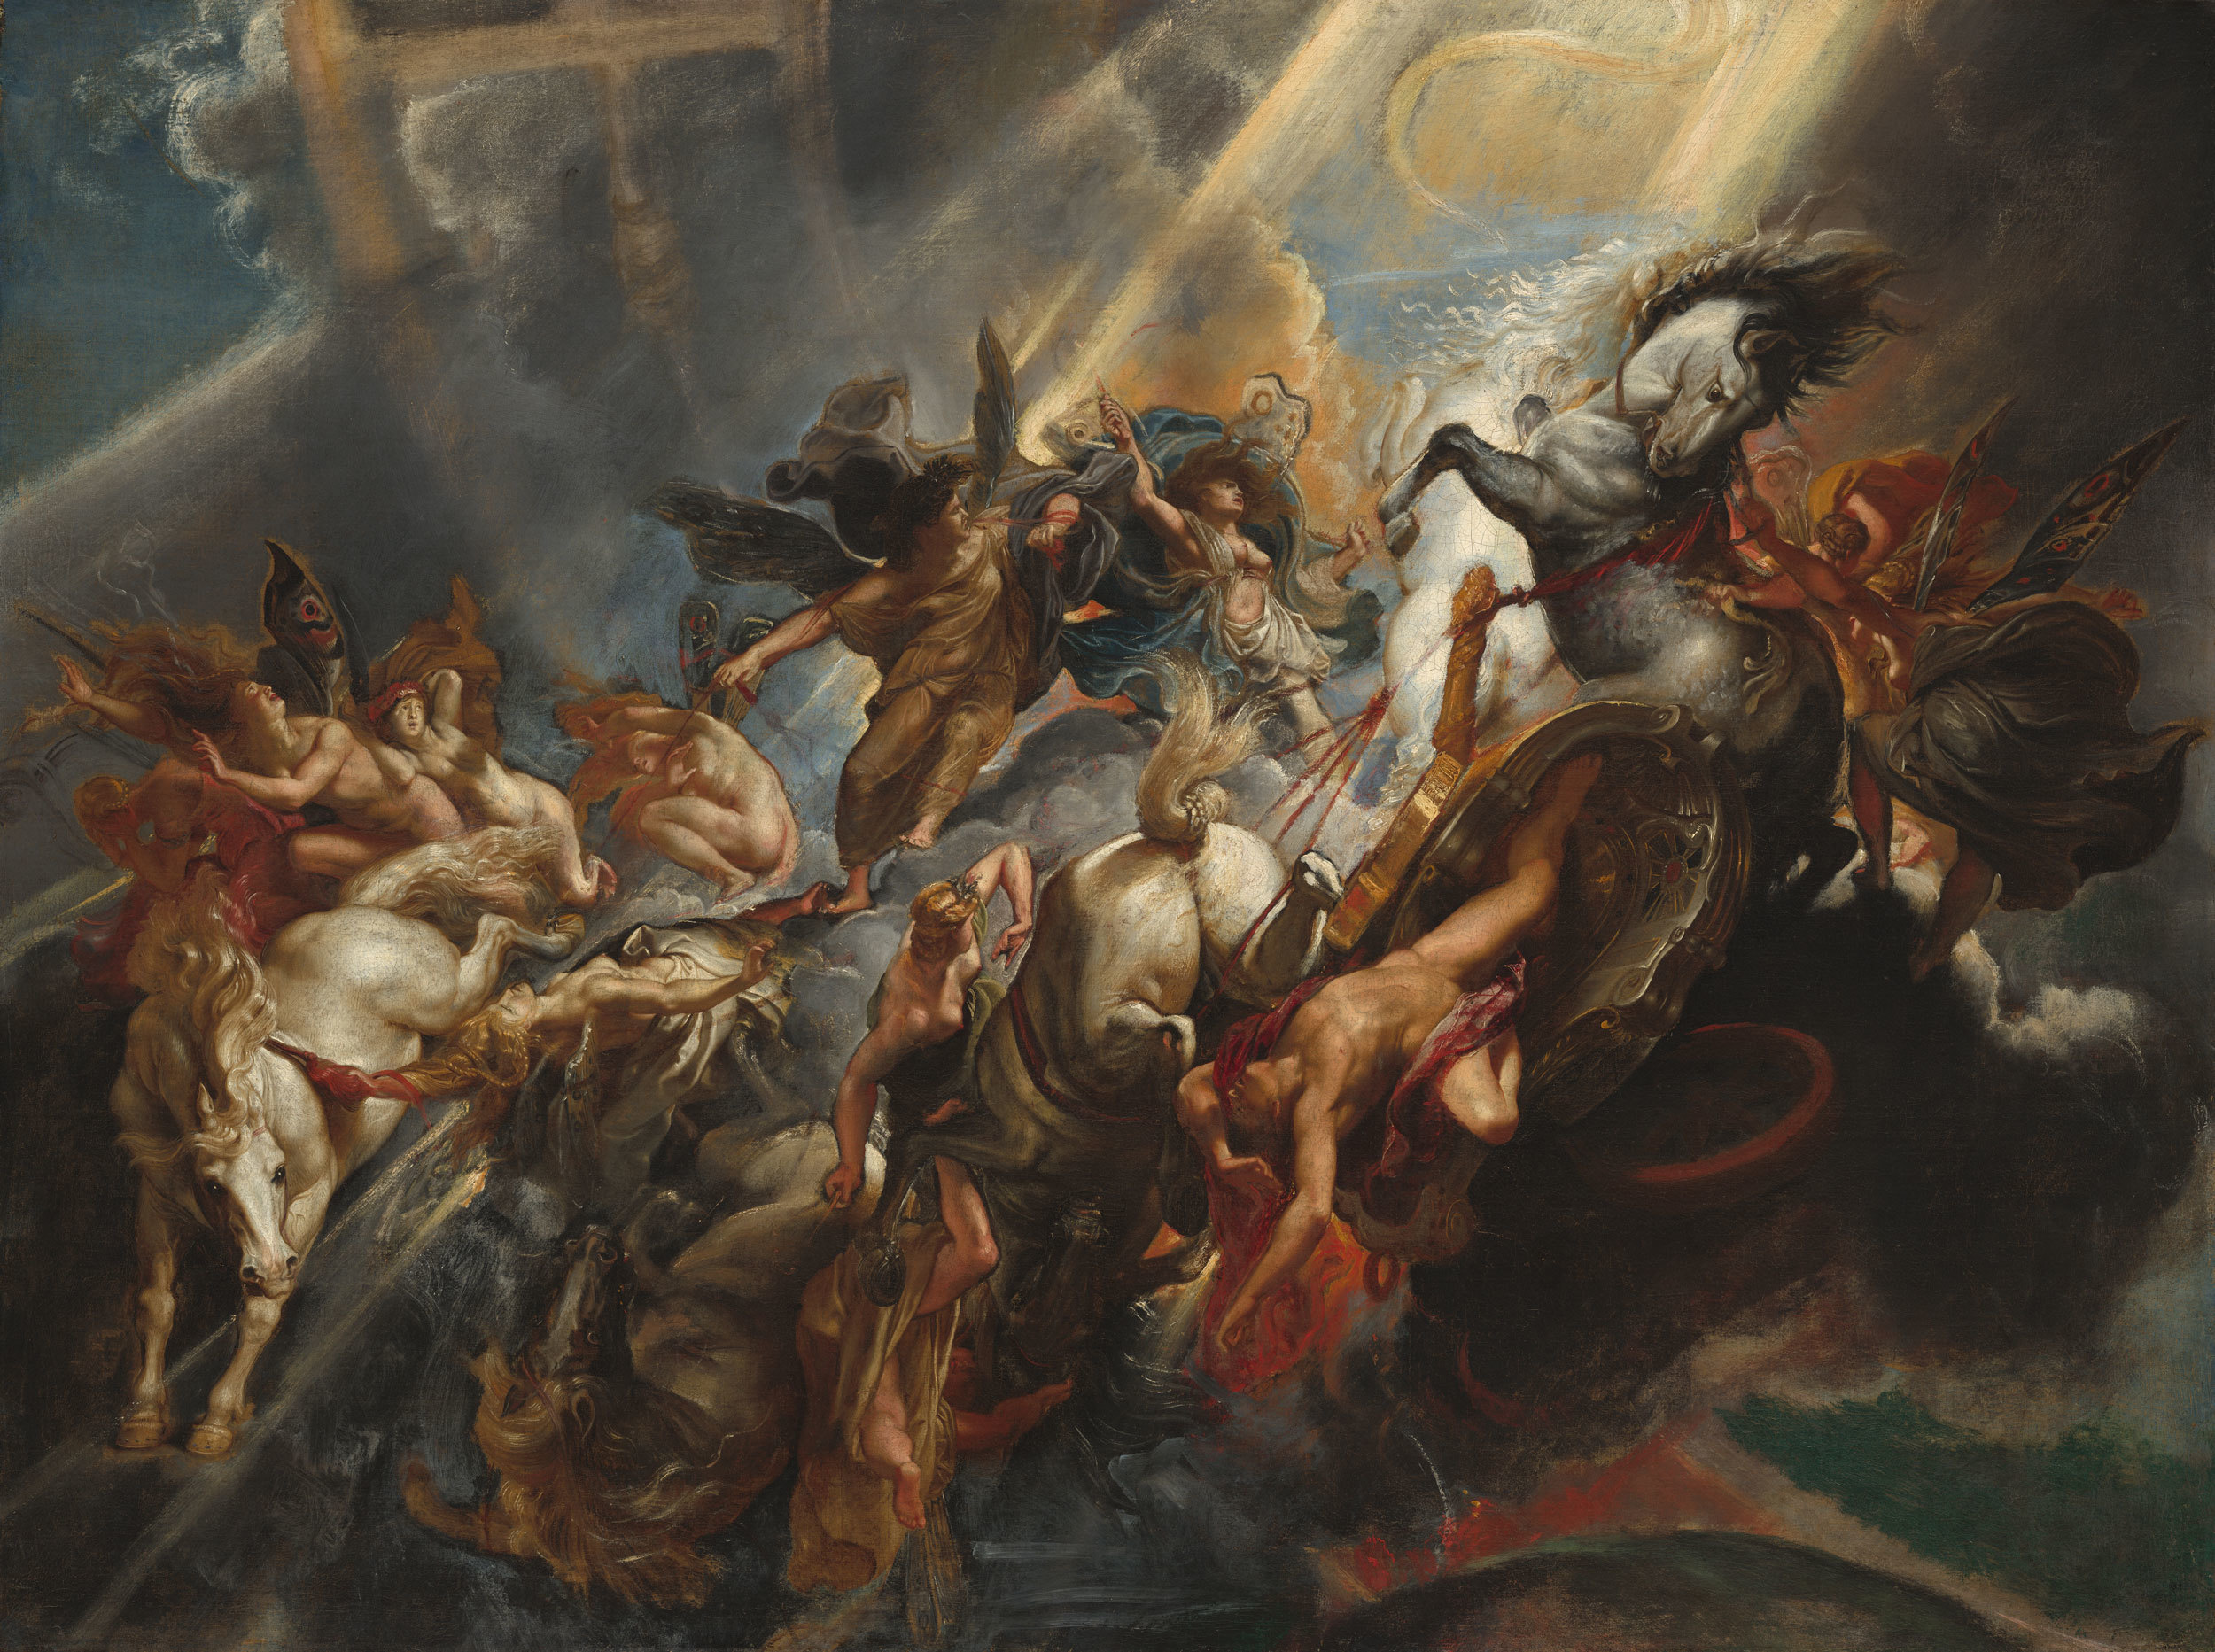 Peter Paul Rubens - Der Fall von Phaeton, Bilderrahmen Eiche